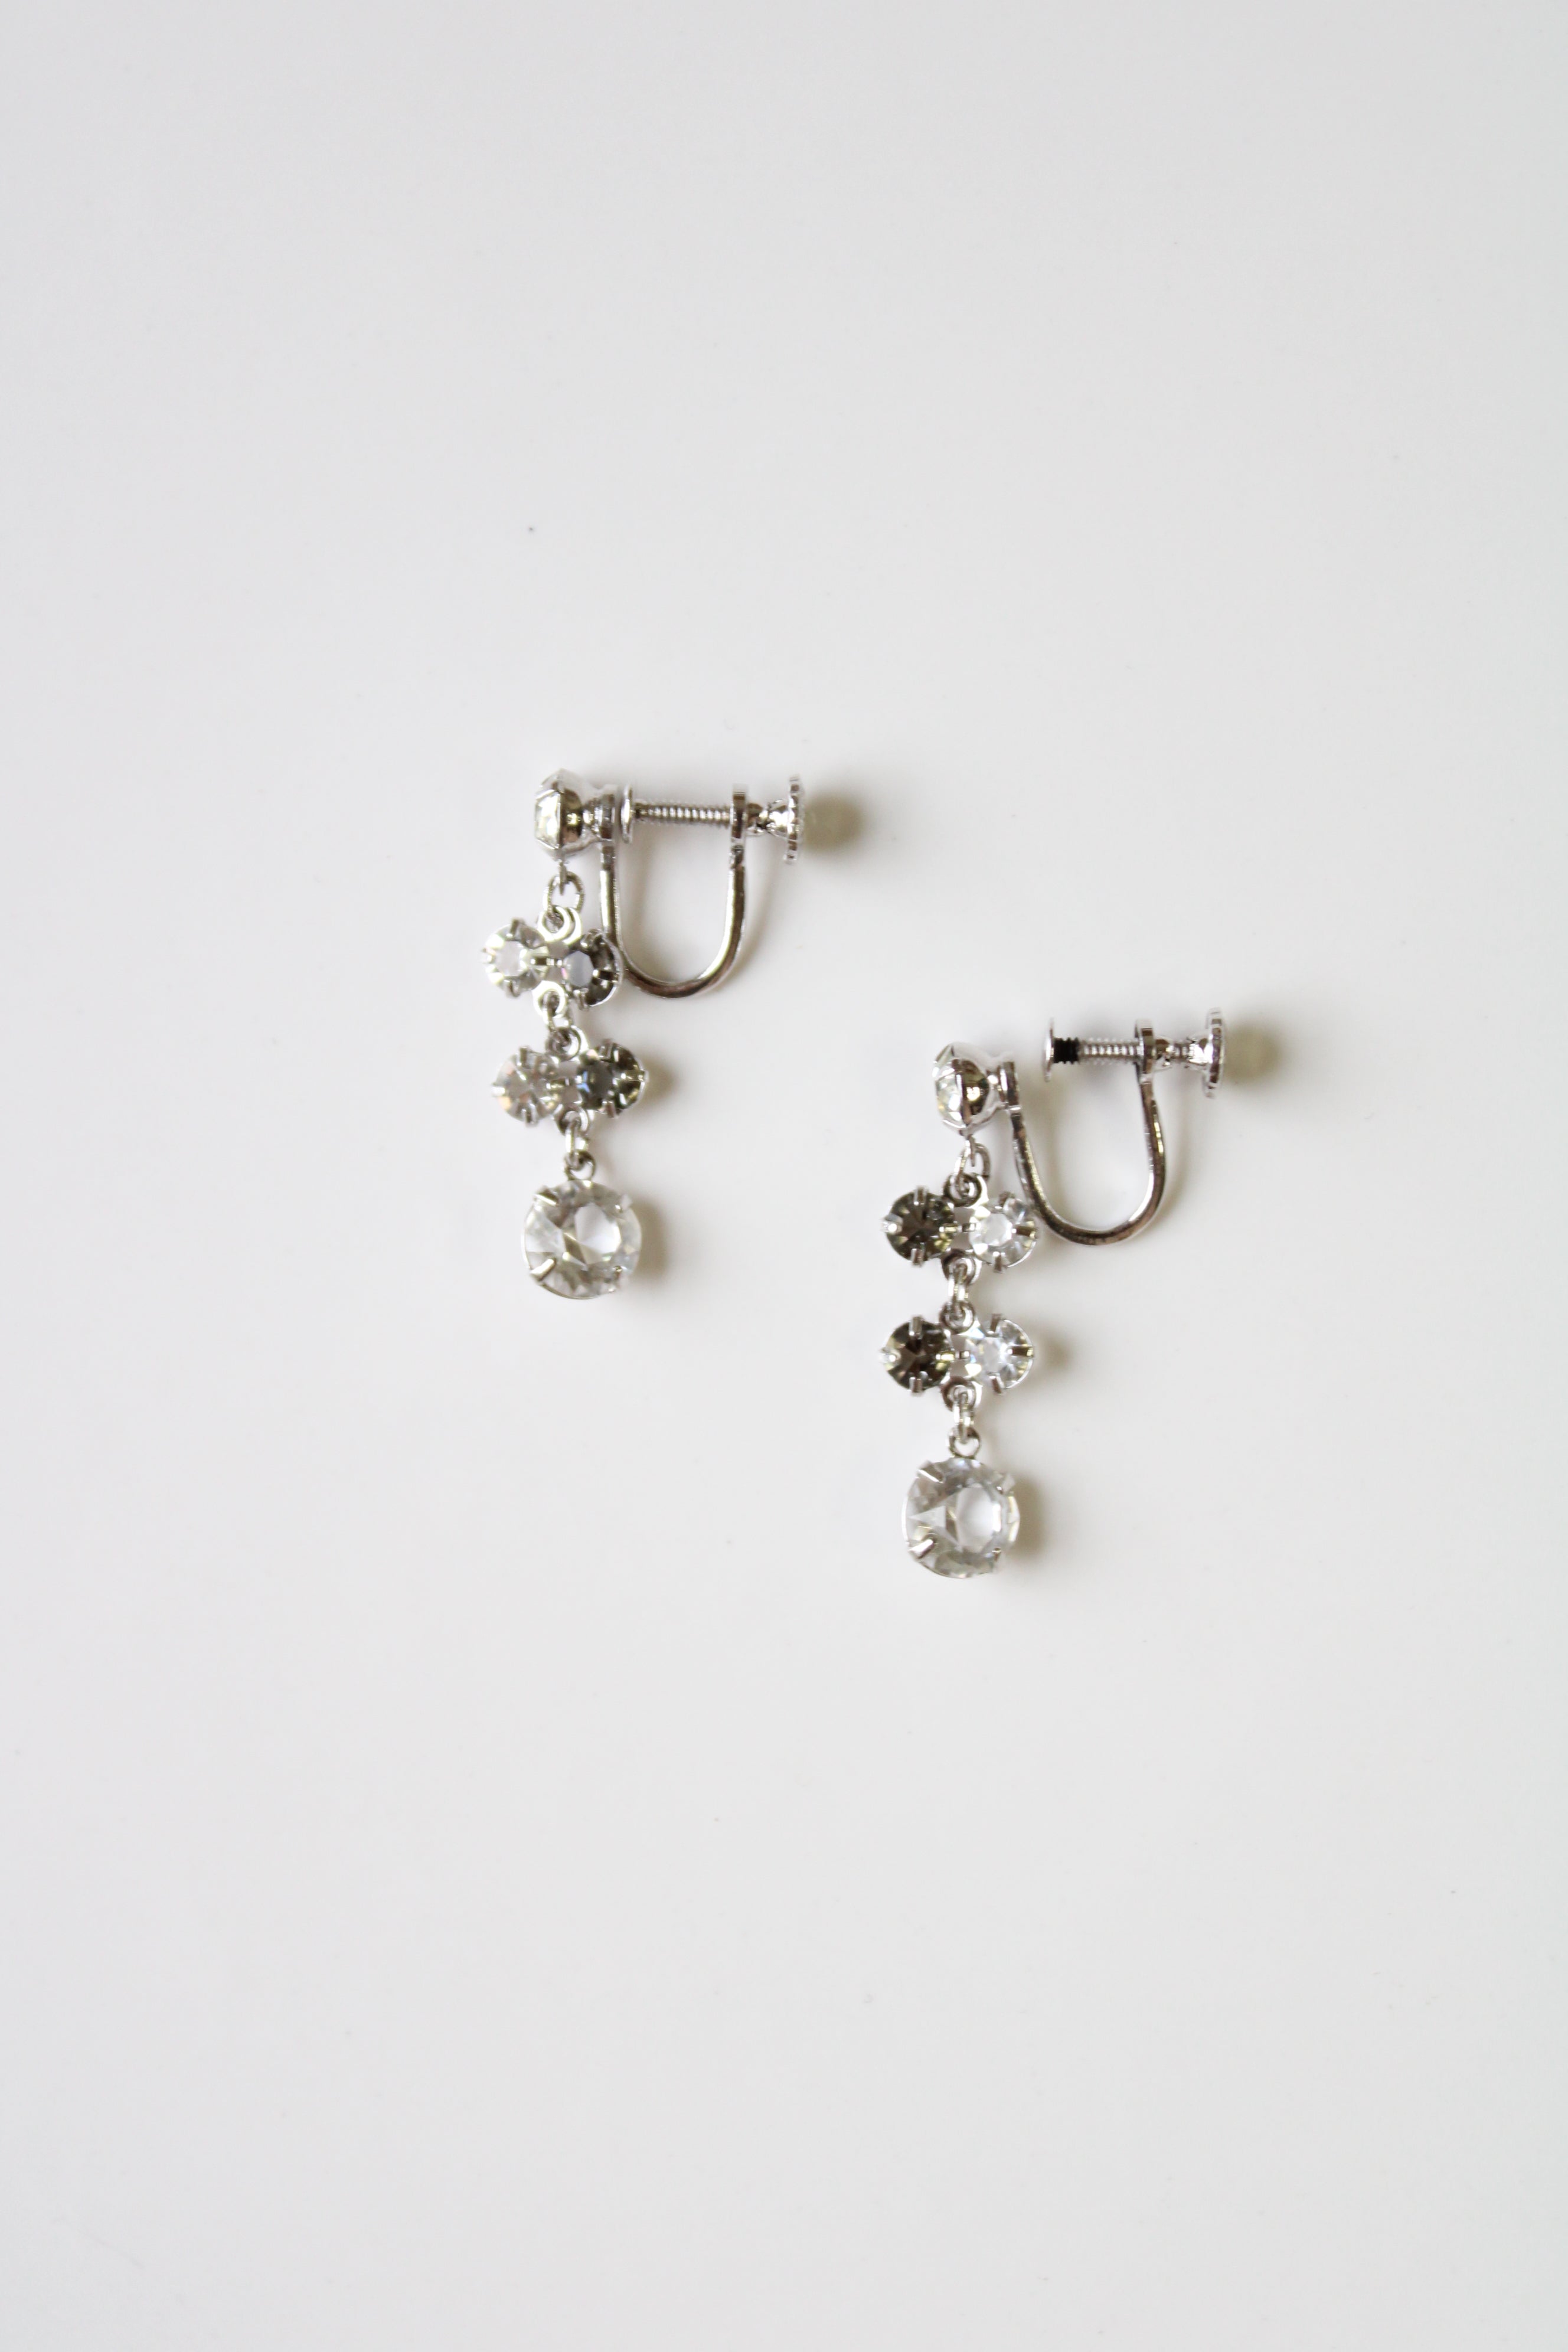 Clear & Gray Stone Screwback Sterling Silver Earrings